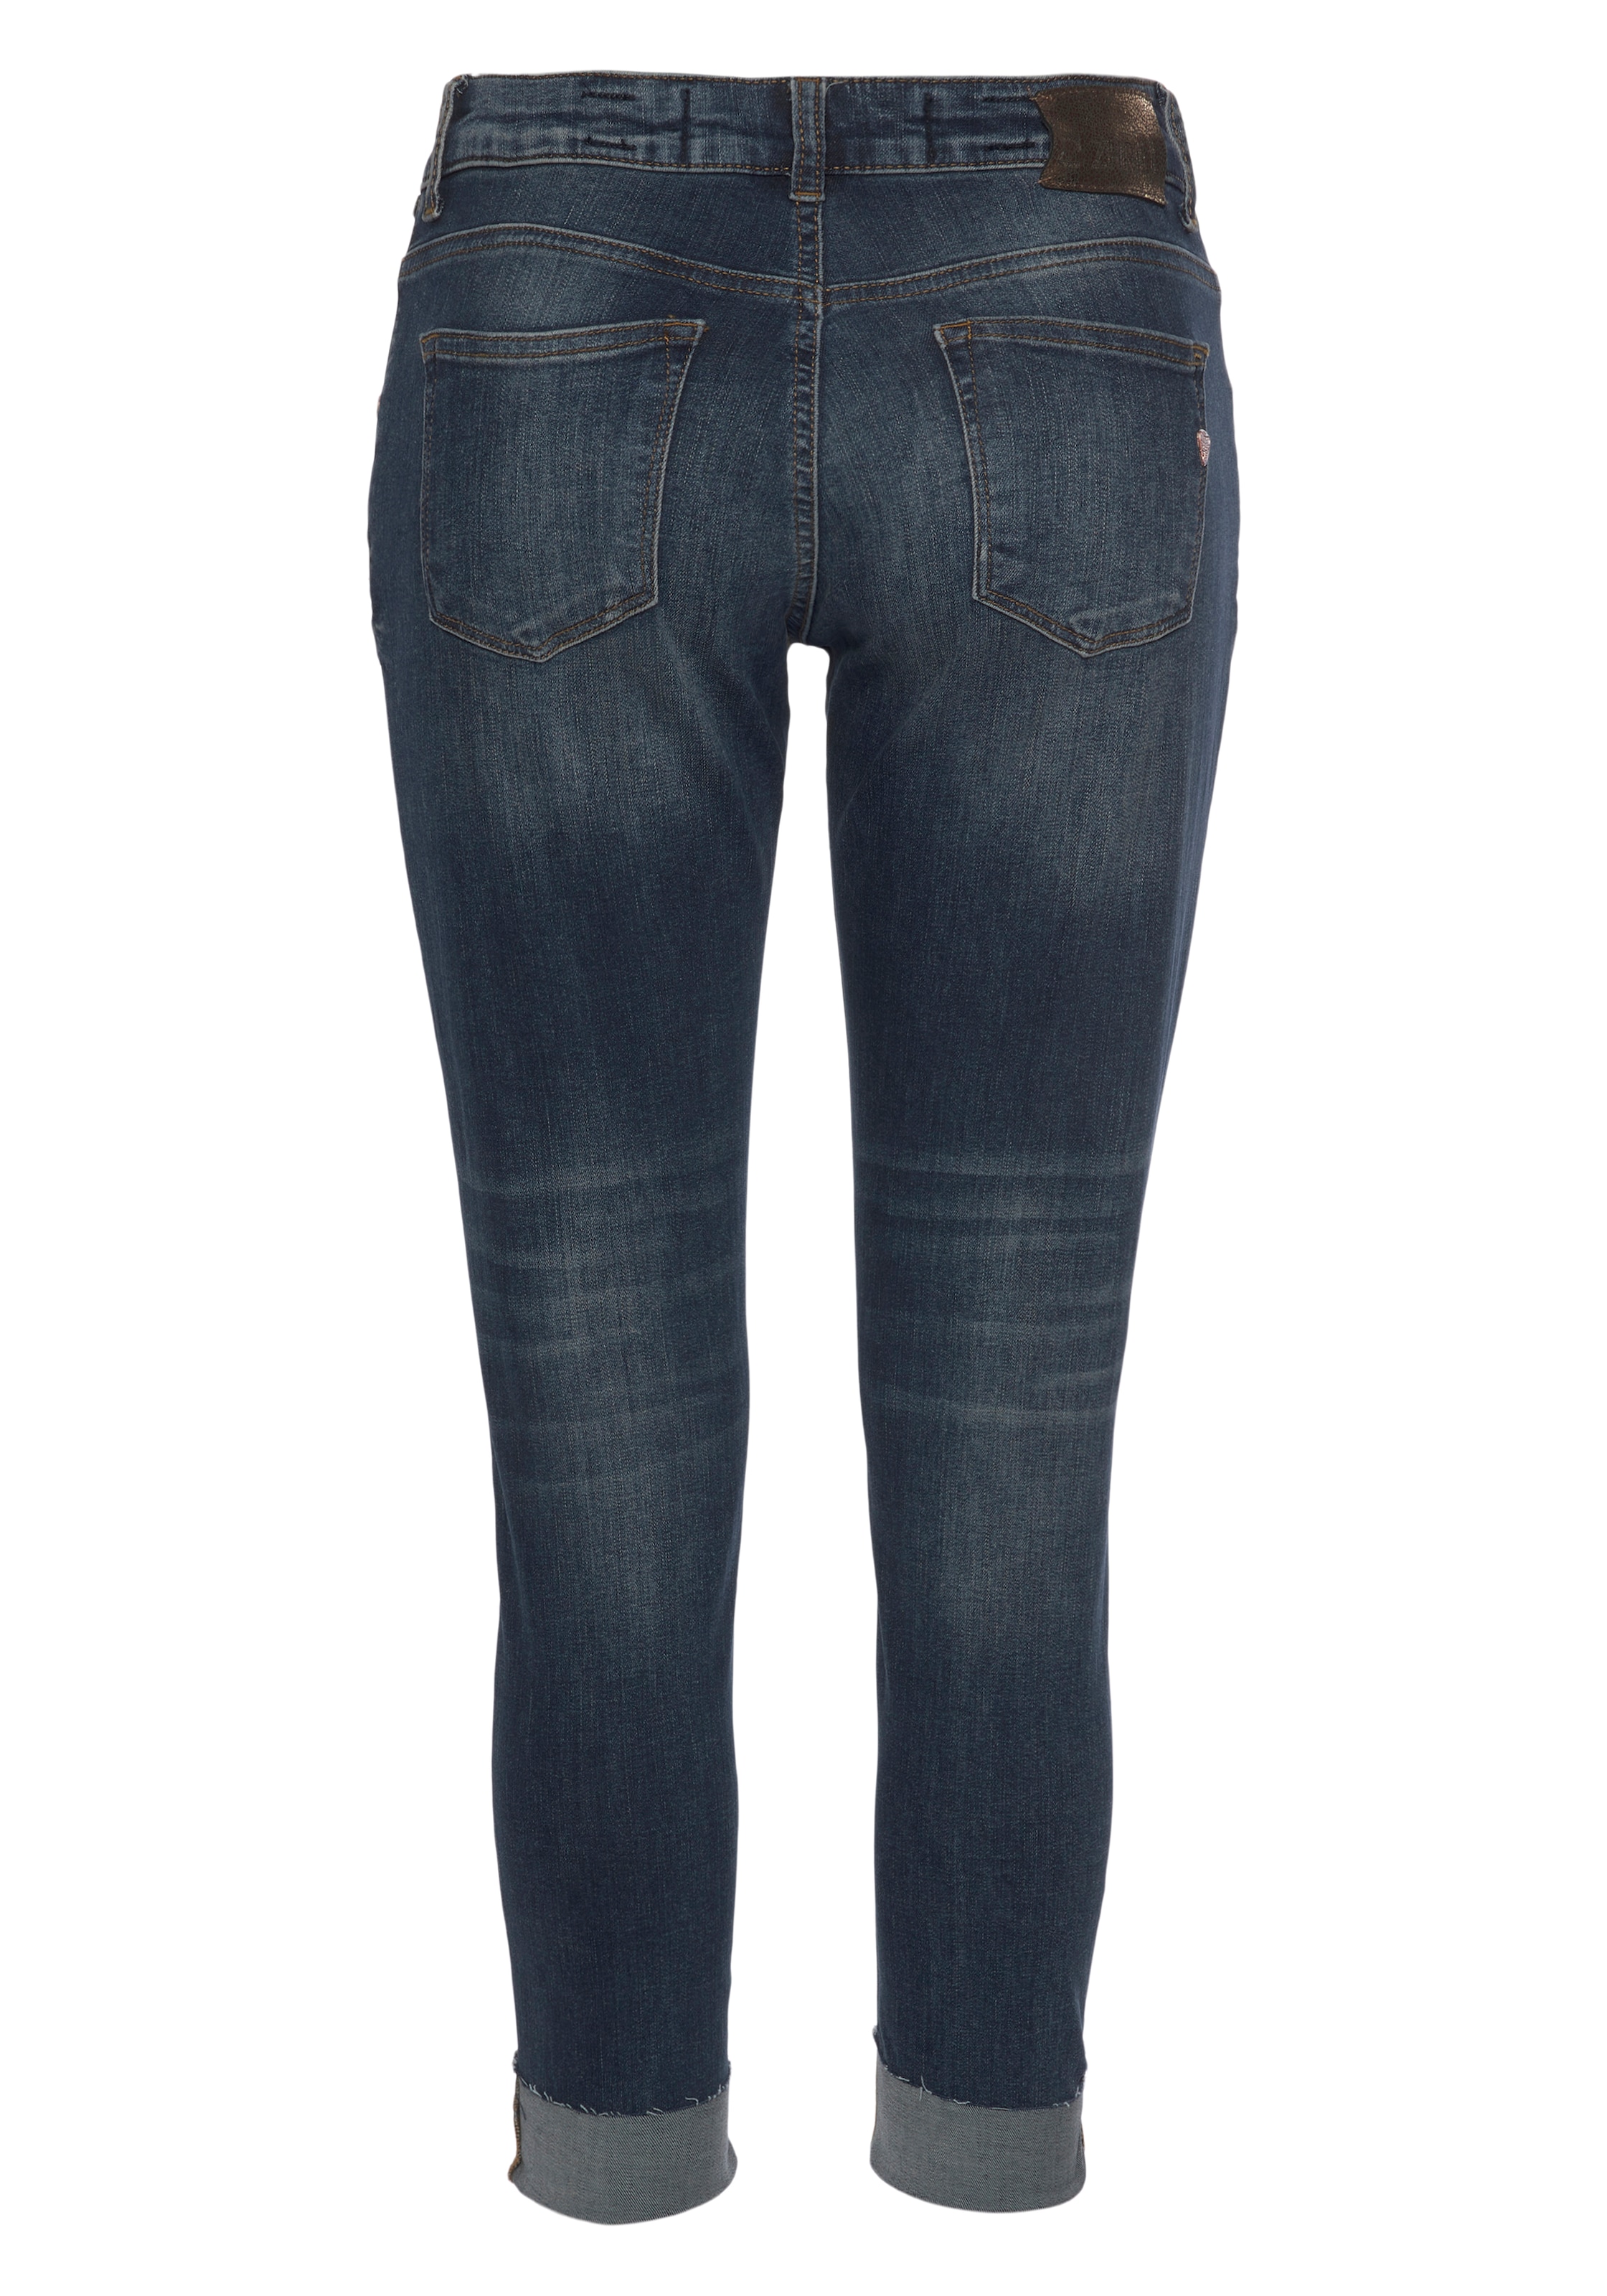 Kontrast Zhrill Krempeln 7/8-Jeans zum Details, »NOVA«, mit shoppen